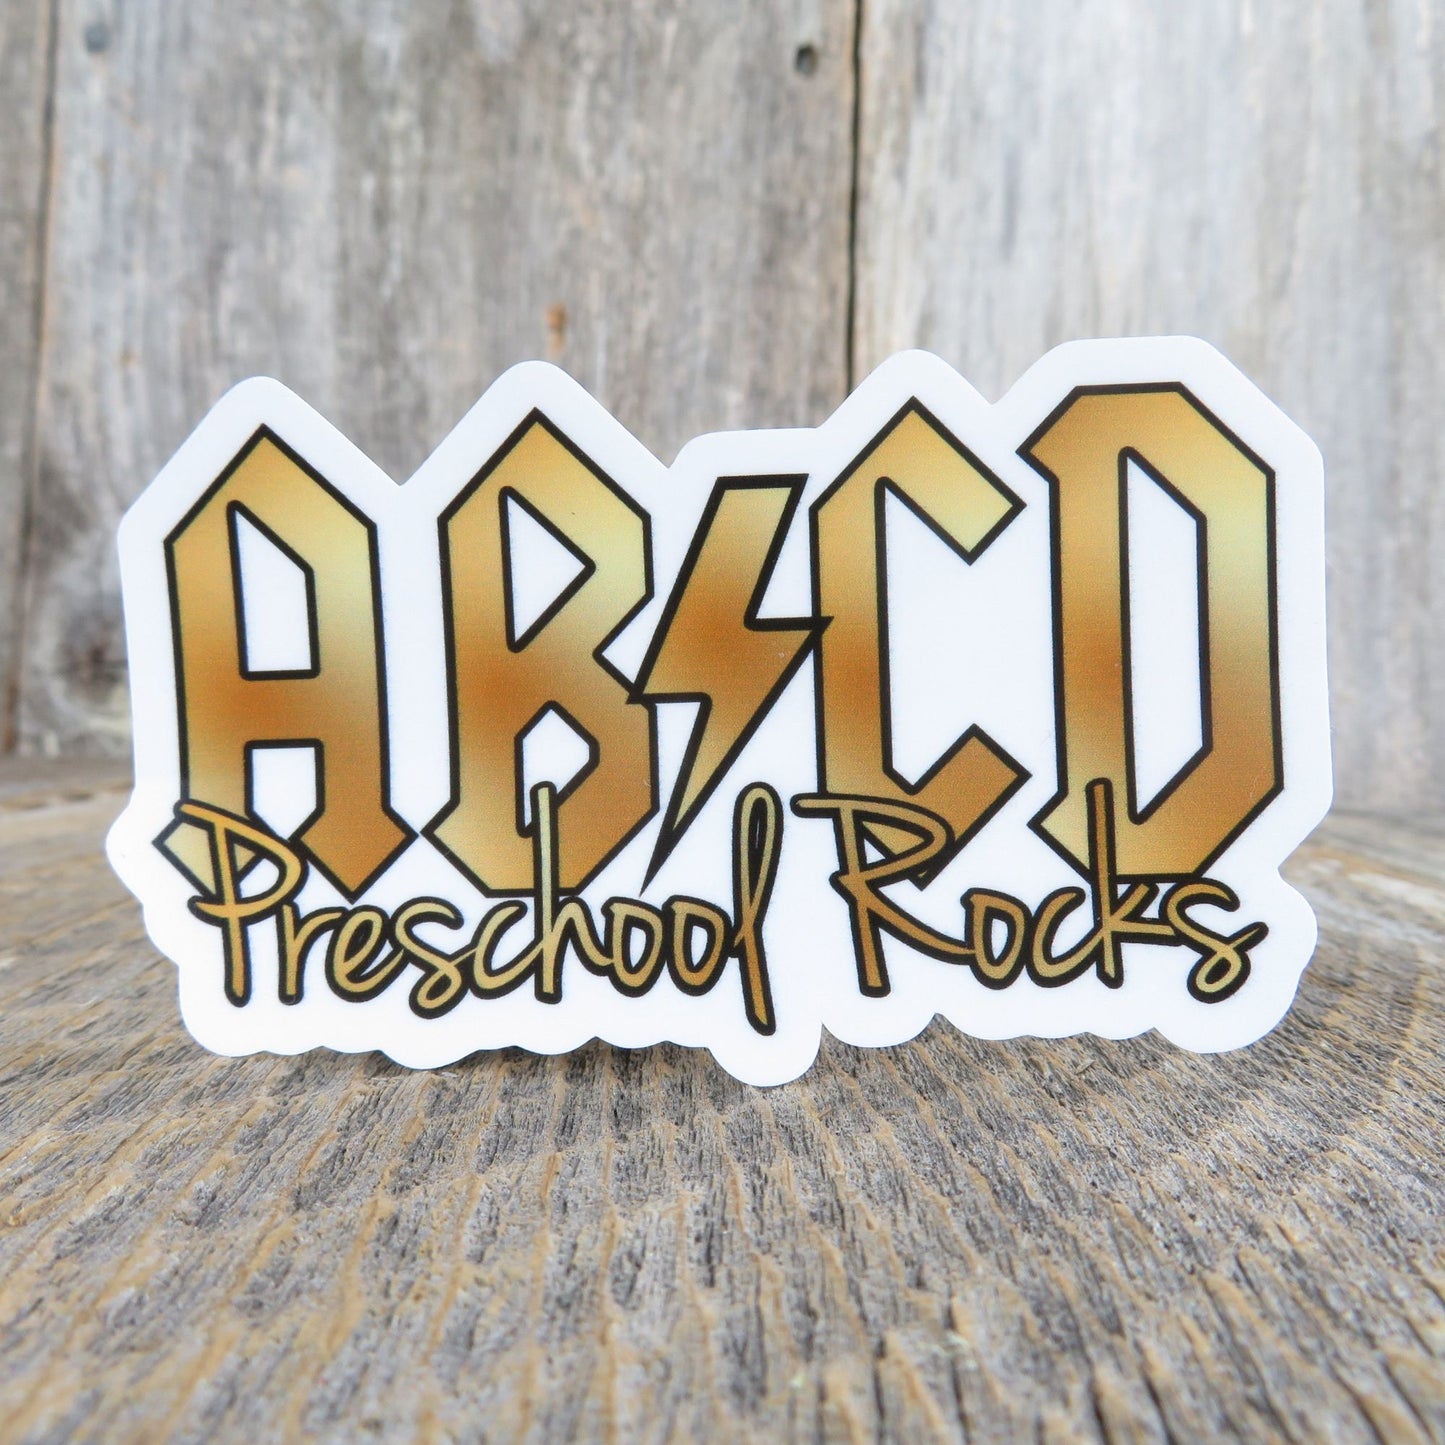 AB CD Preschool Rocks Sticker Cool Rock and Roll Teacher School